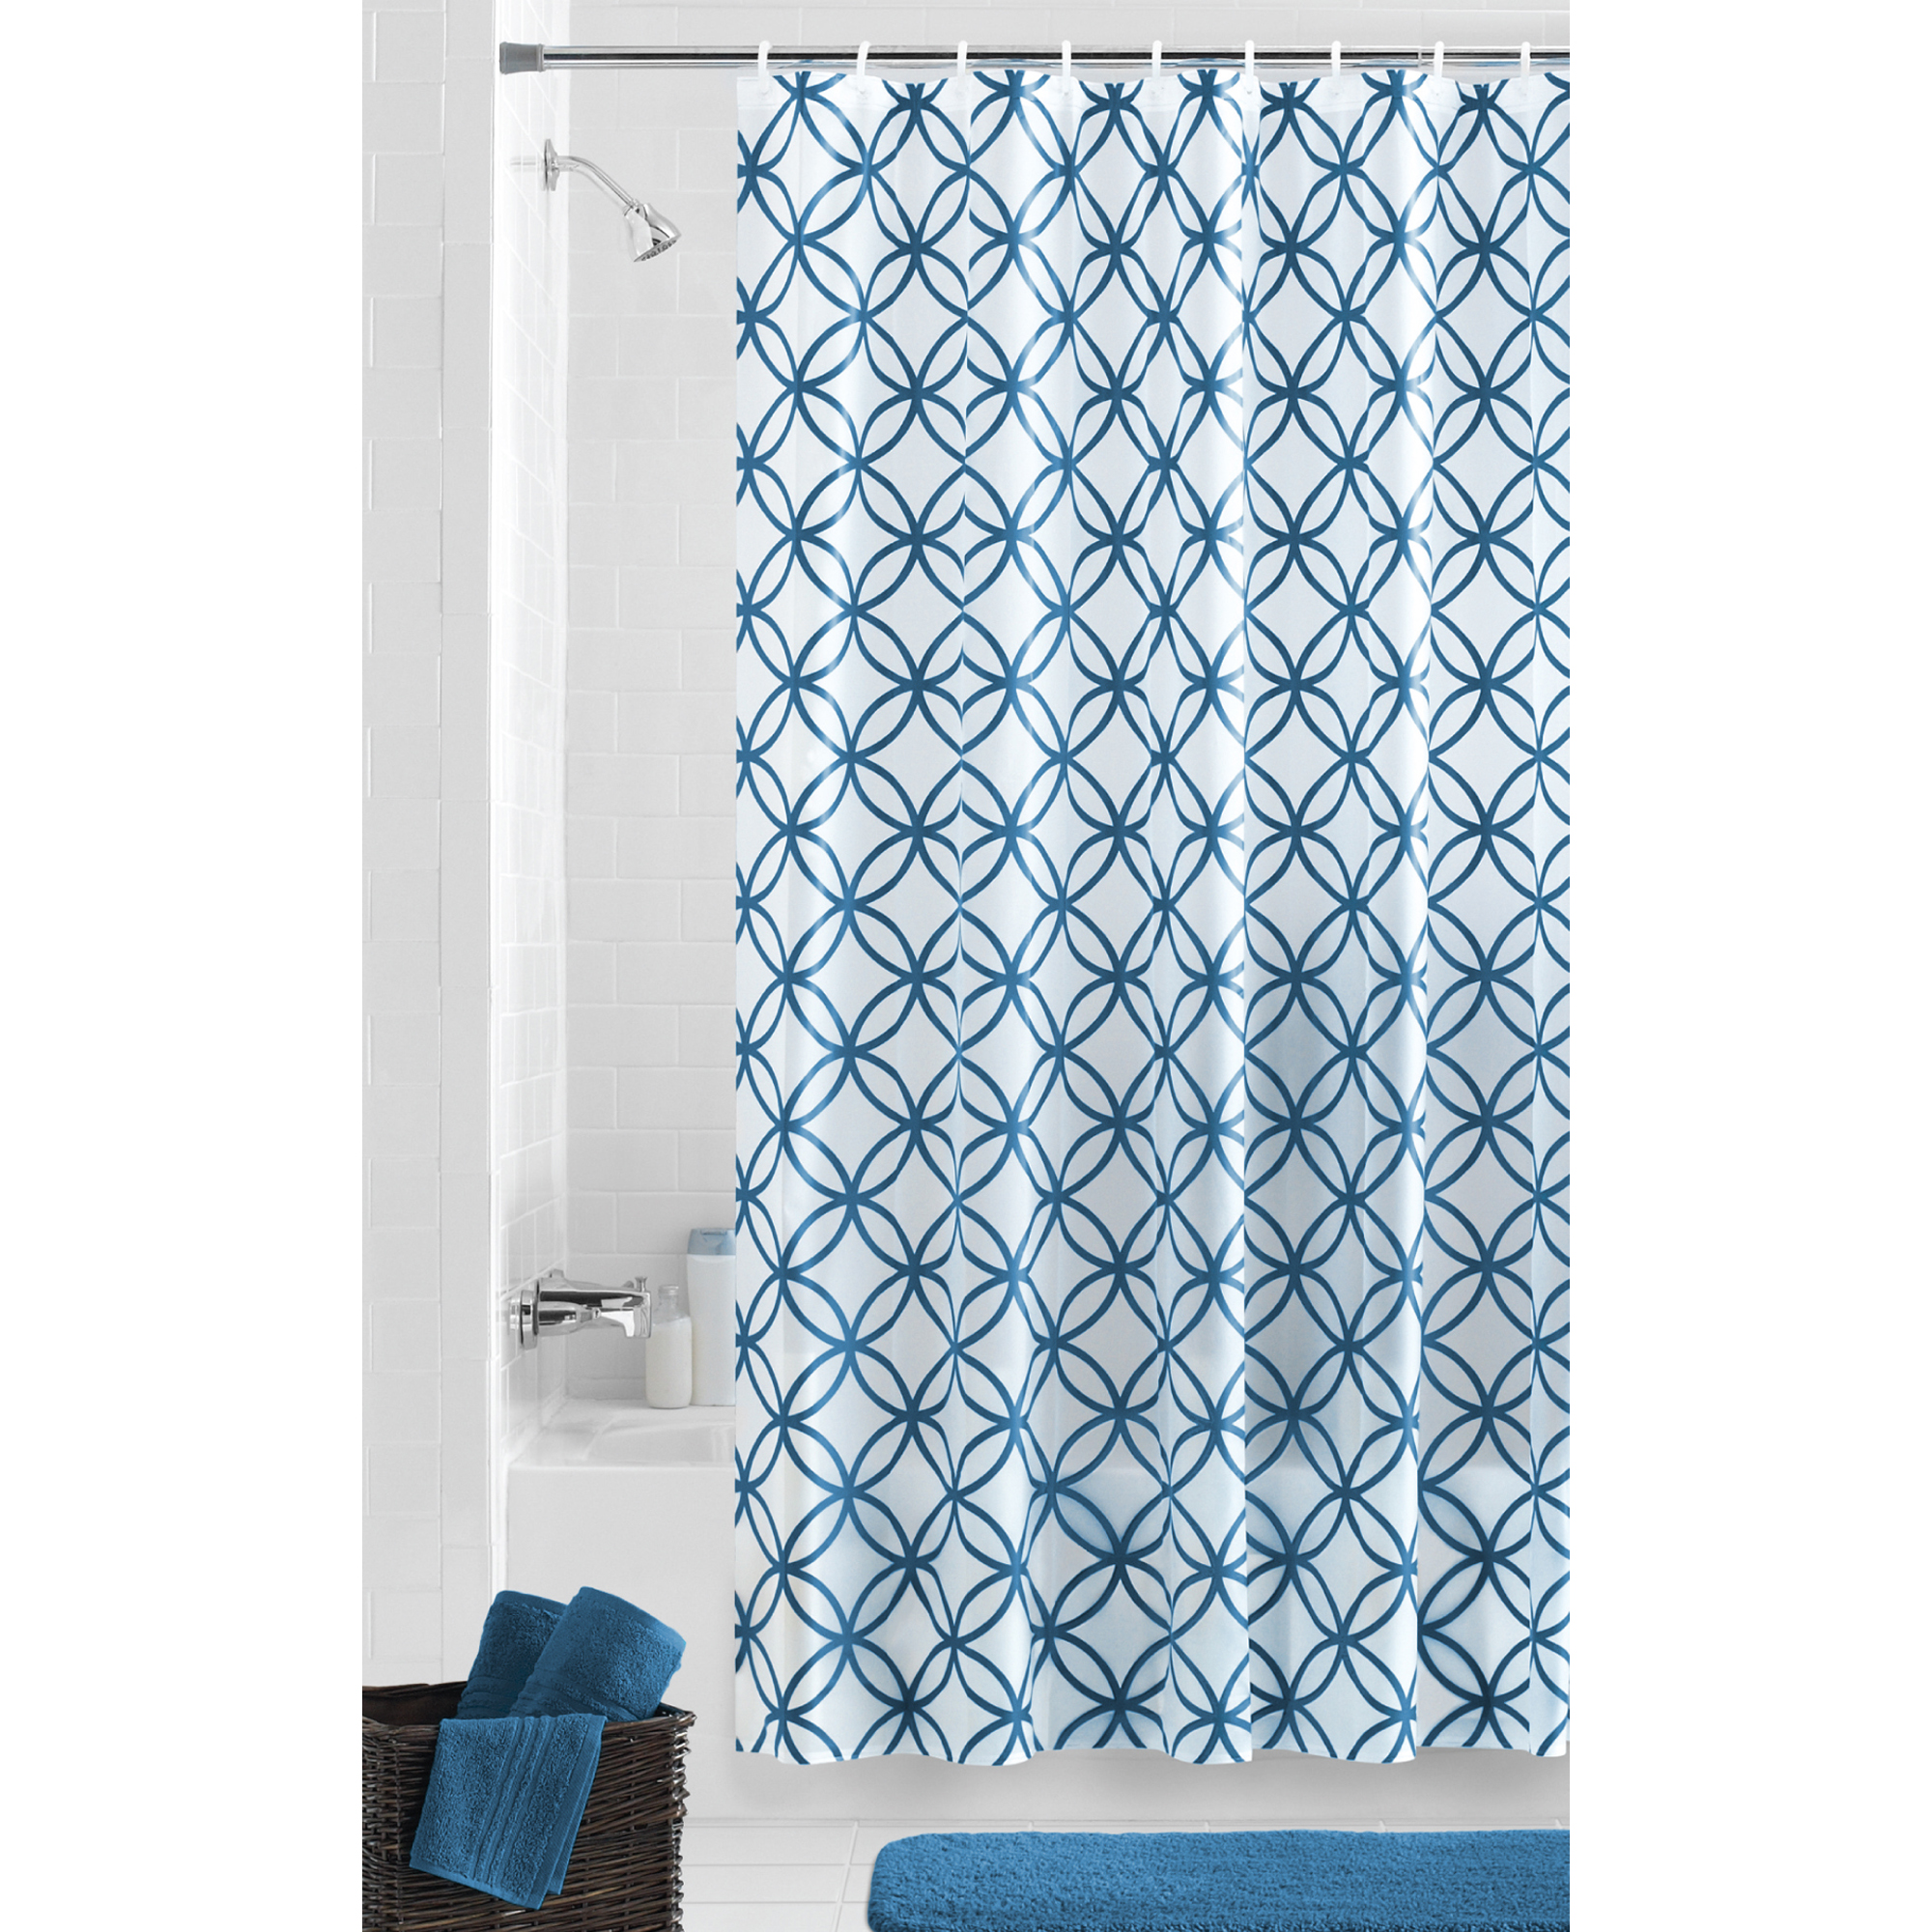 Teal and Blue PEVA Shower Curtain, 70" x 72", Mainstays Hadley Geometric, Waterproof - image 1 of 9